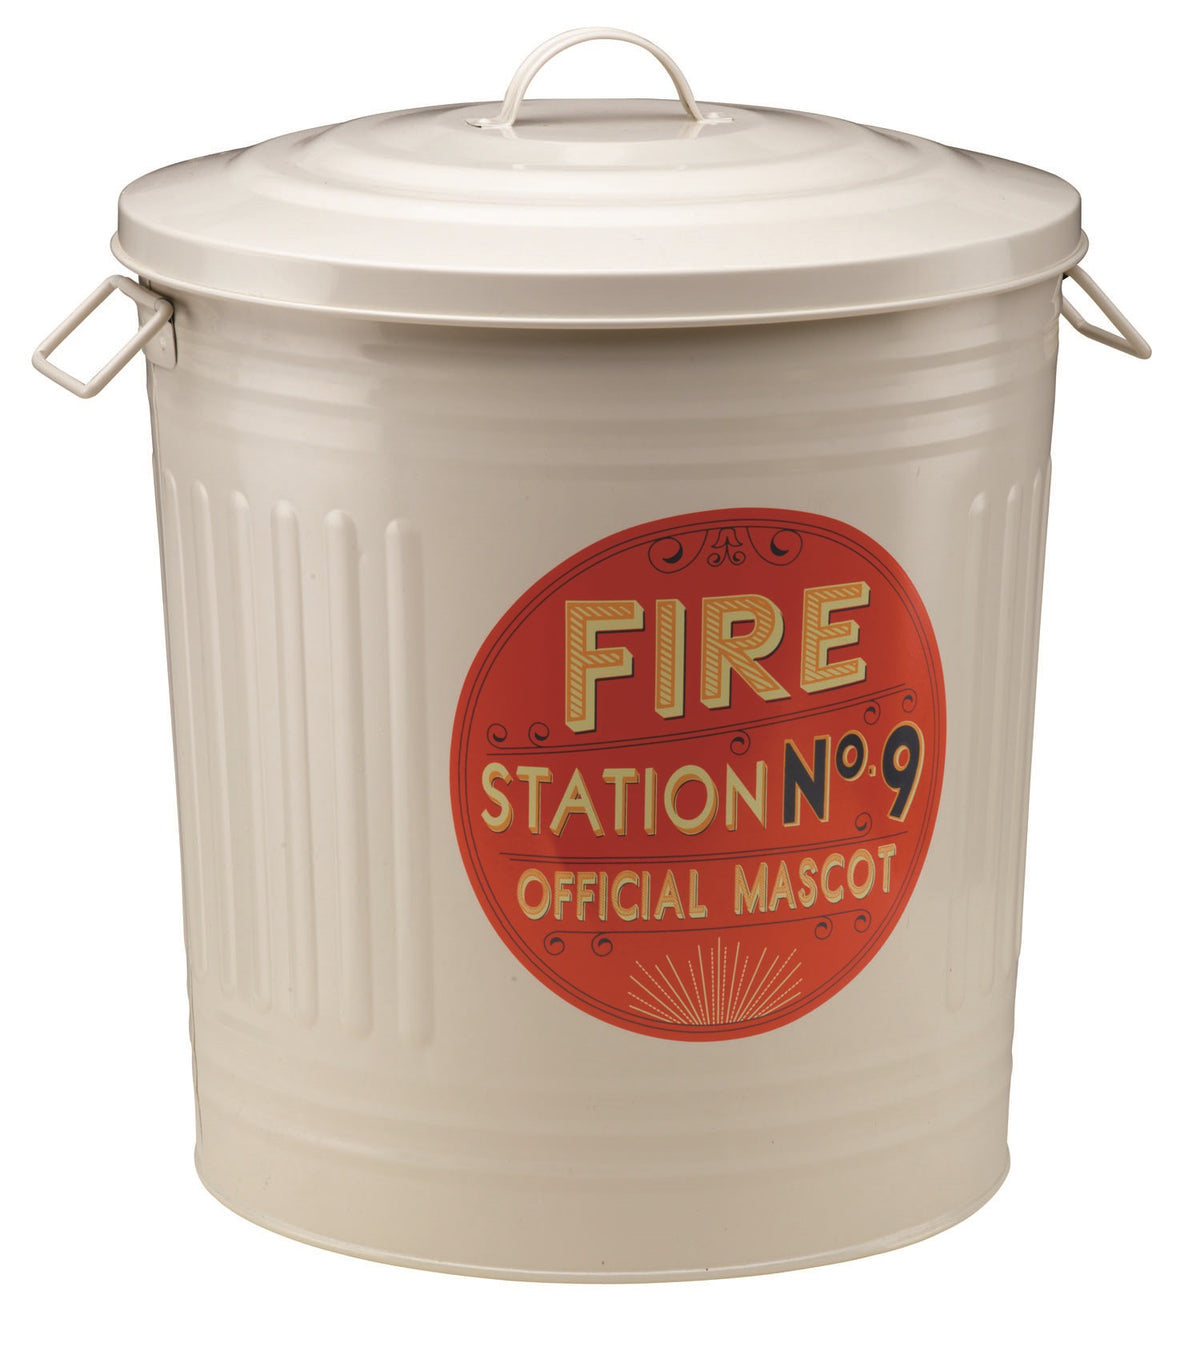 Ore Pet F431 Large Fire Station No. 9  Food Bin, Cream